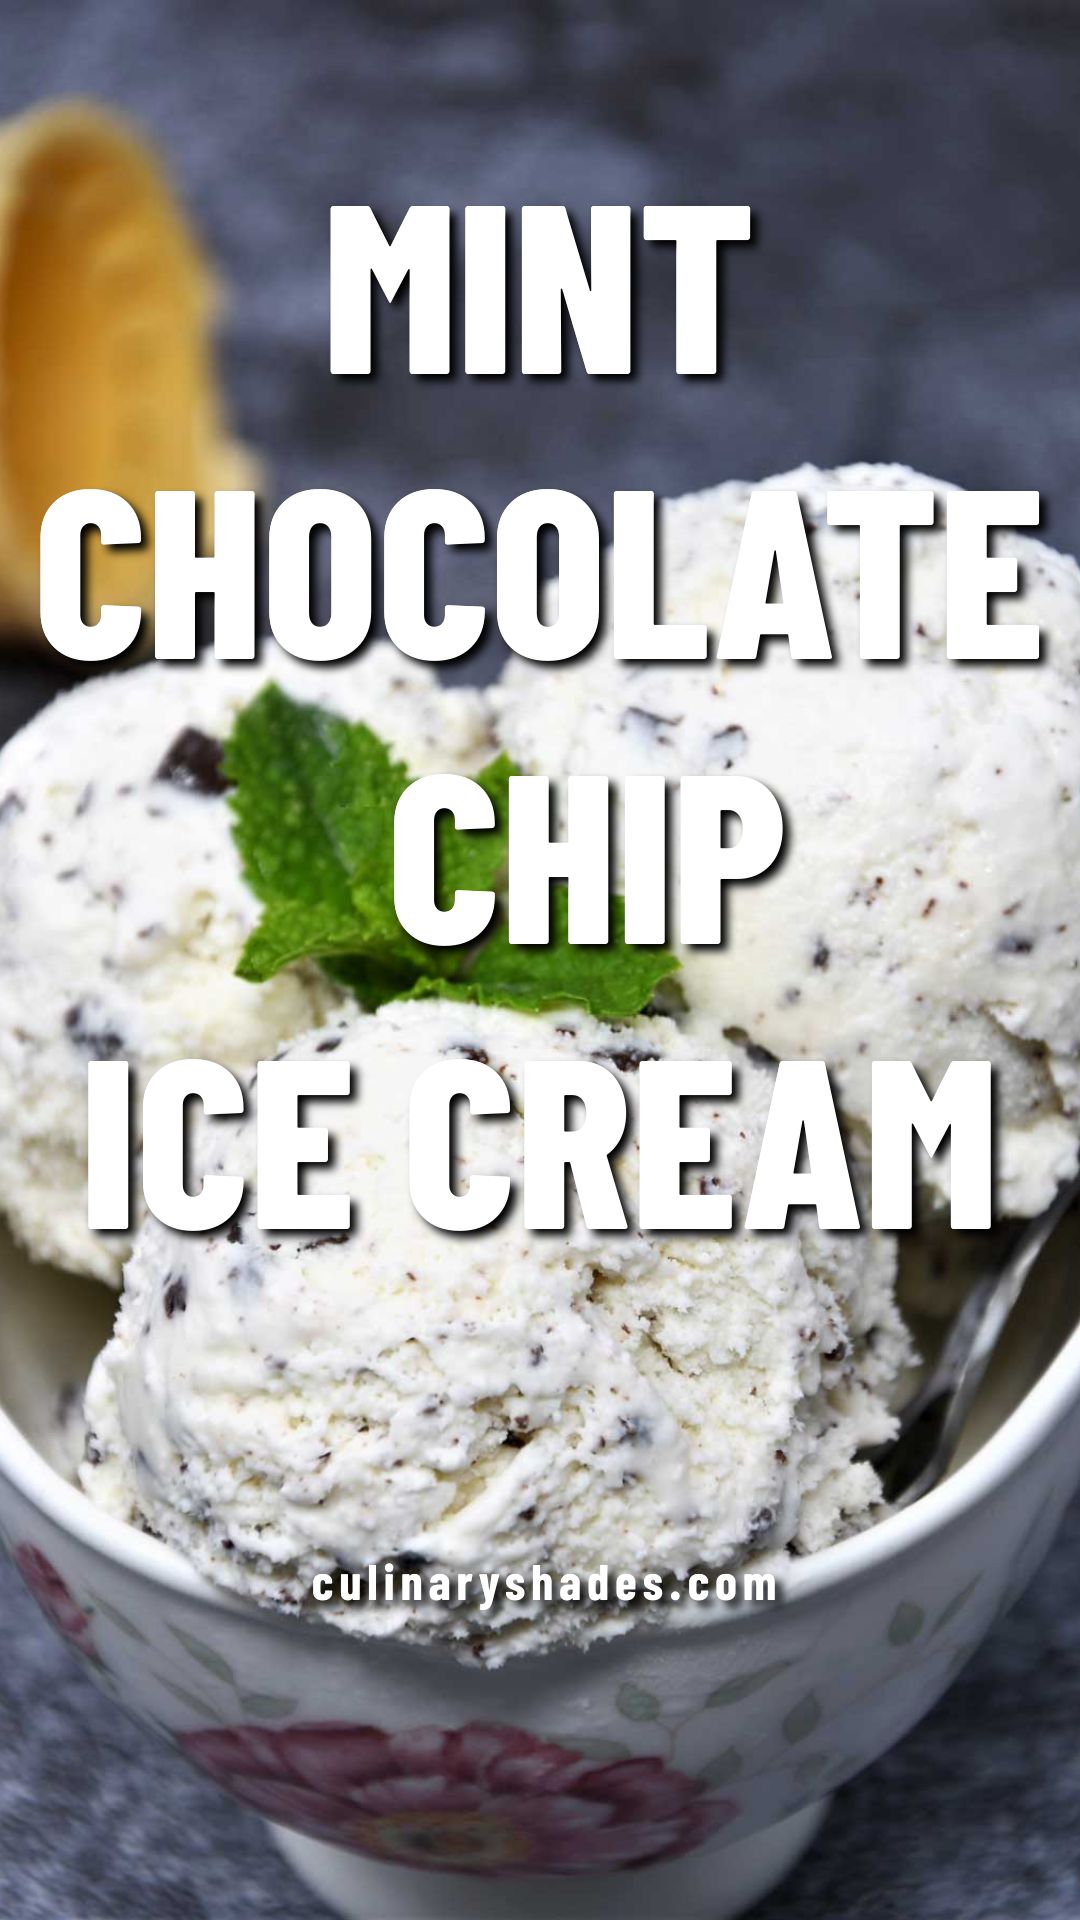 Mint chocolate chip ice cream scoops.